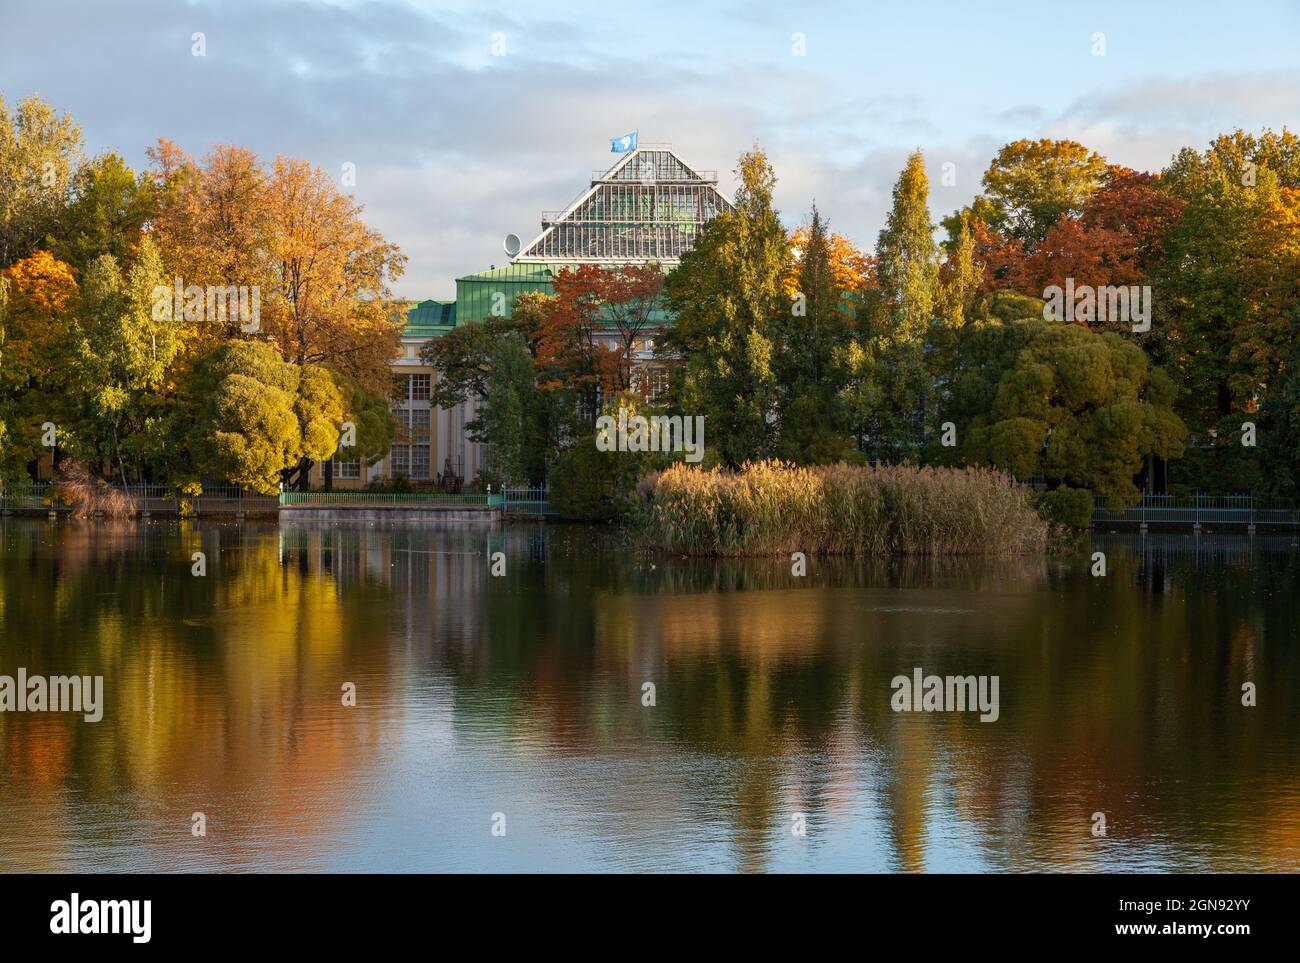 Tauride Palace in Tauride Garden, Saint Petersburg, Russia. Stock Photo